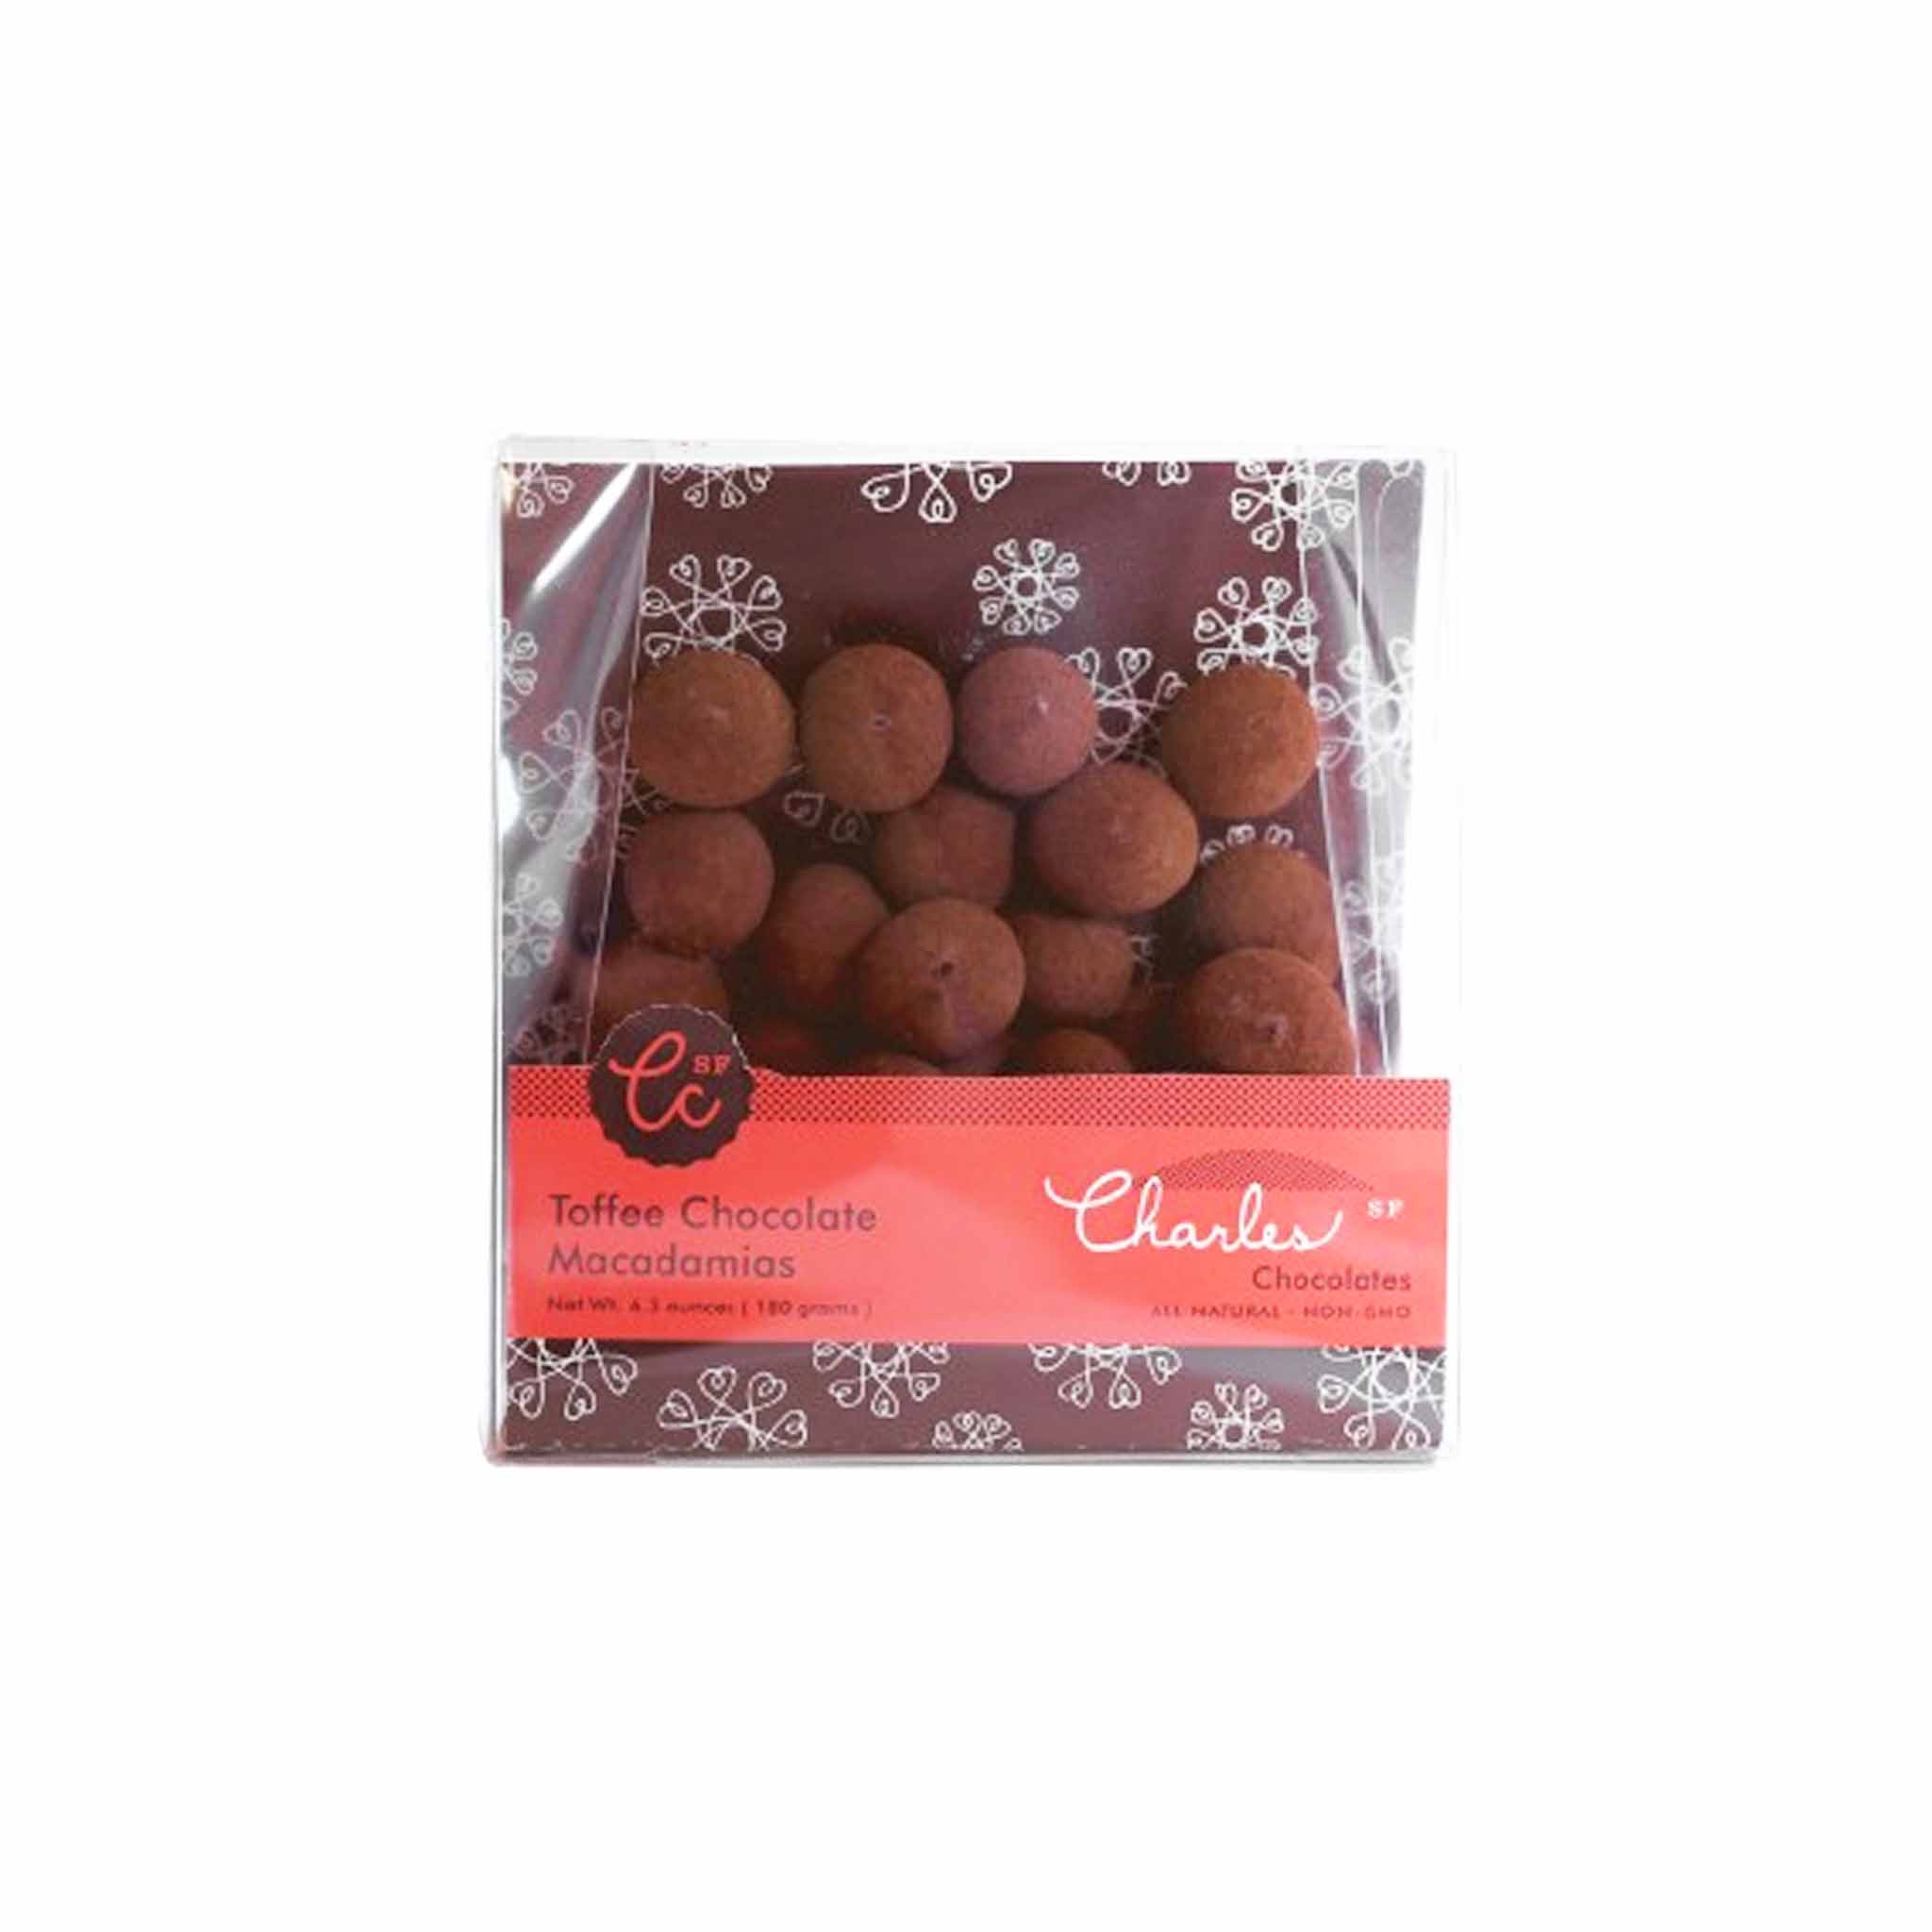 CHARLES CHOCOLATES TOFFEE CHOCOLATE MACADAMIA 6.3oz